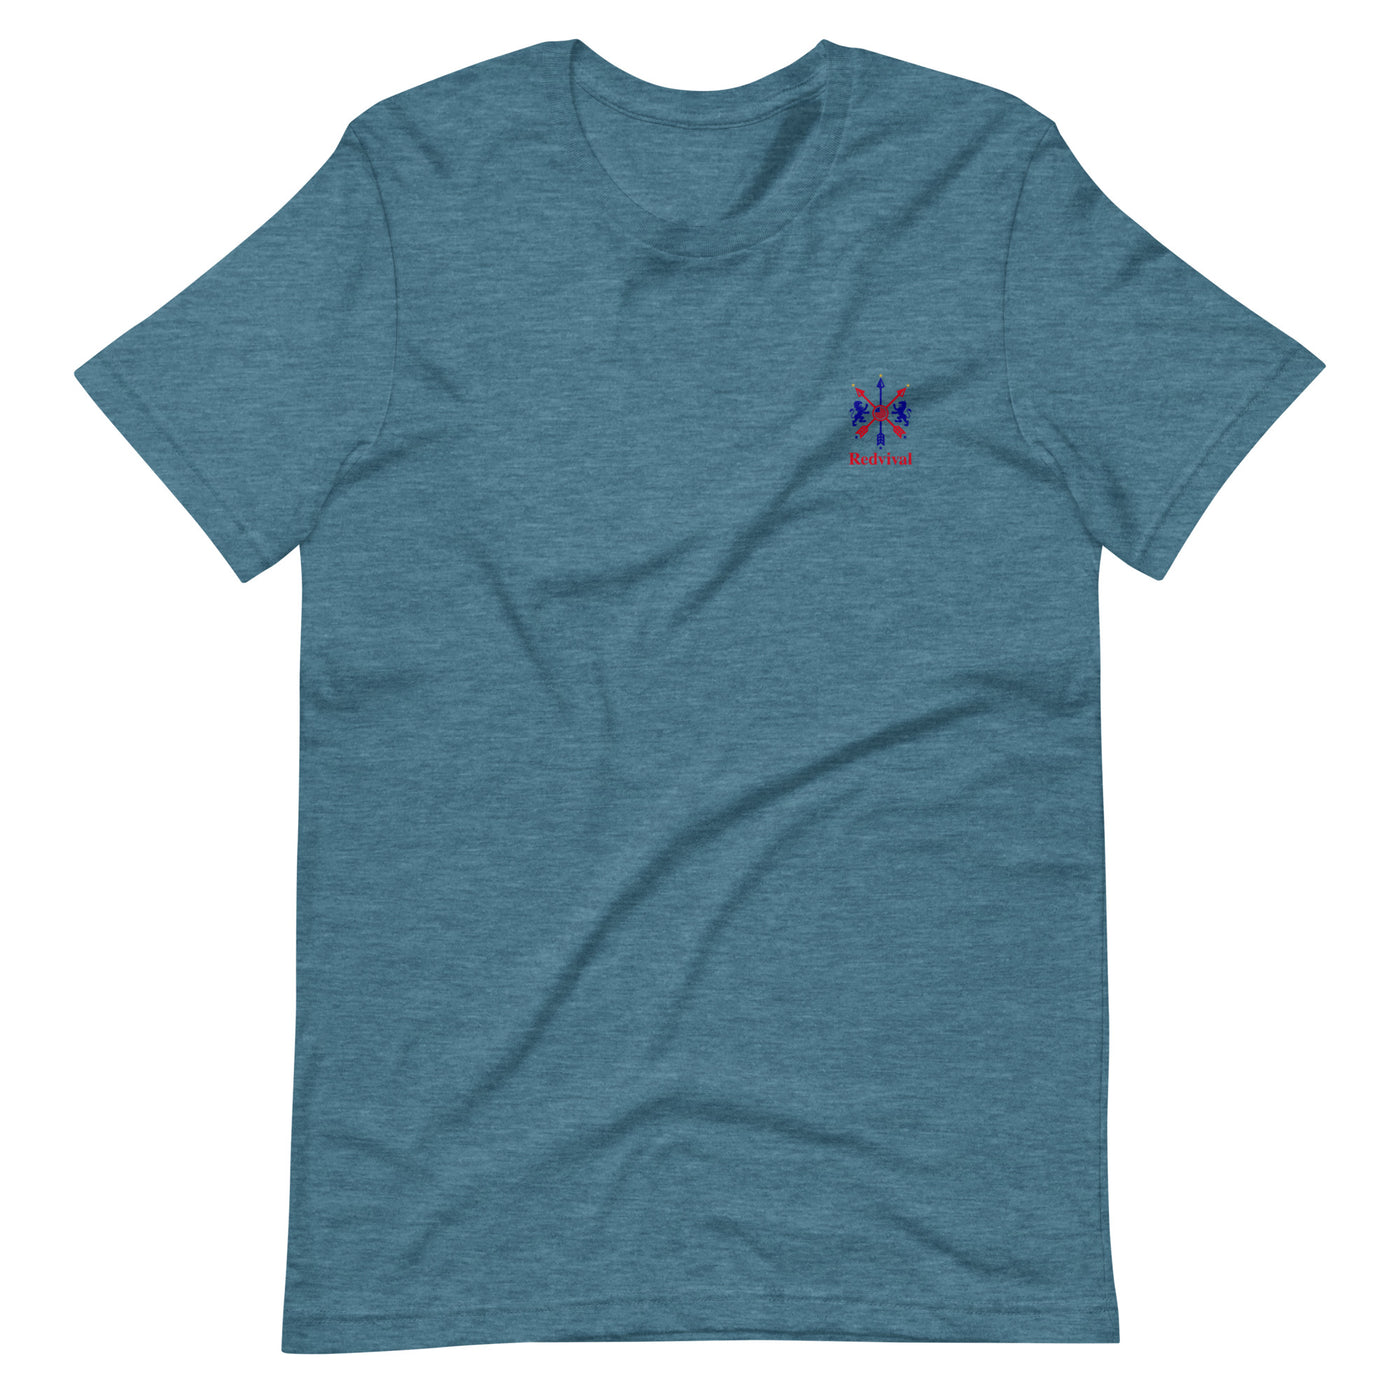 Sportfishing " no pocket" - Unisex t-shirt